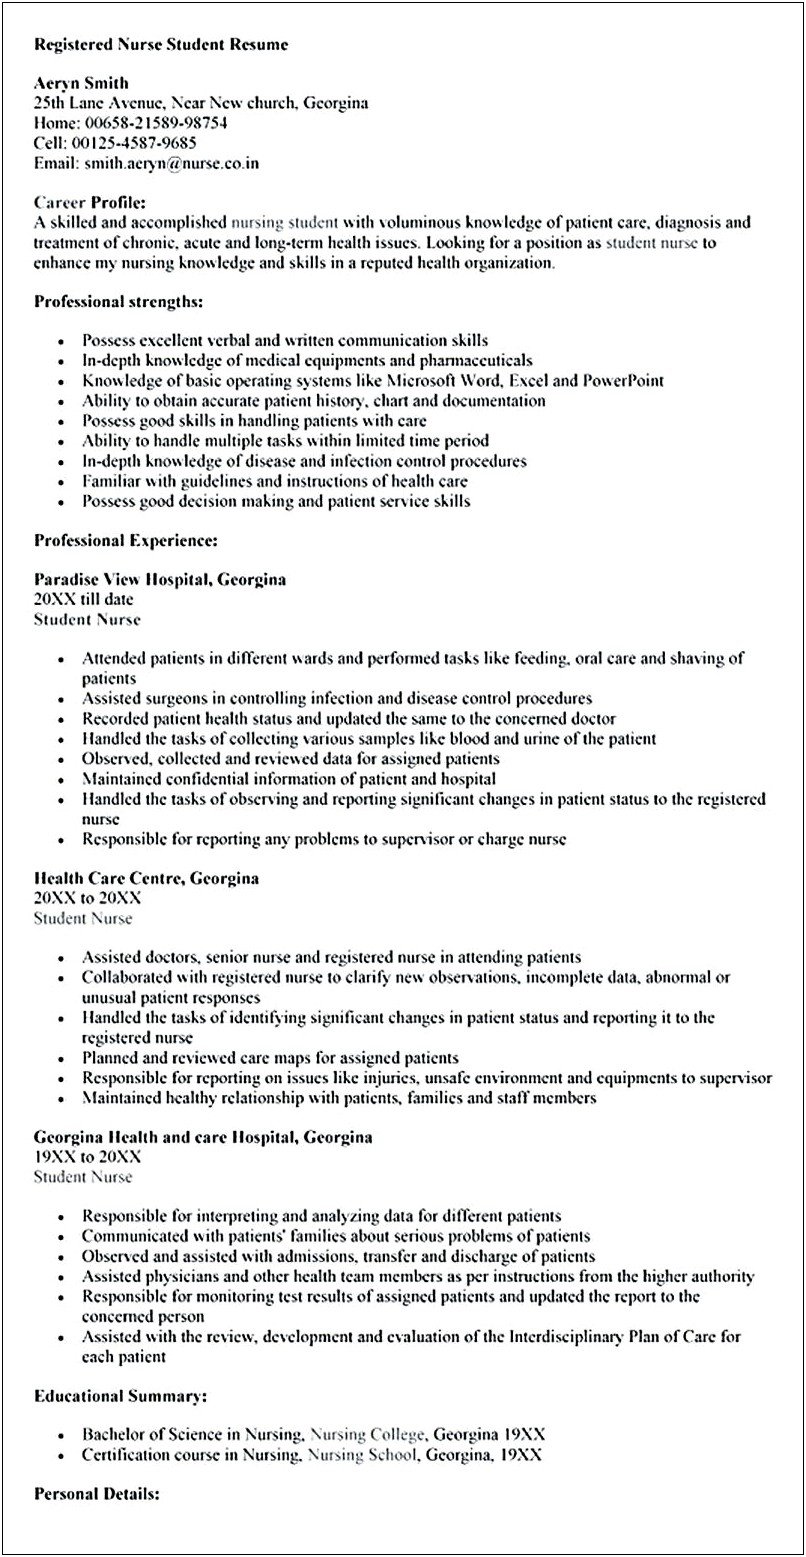 Nursing Student Resume Summary Of Qualifications